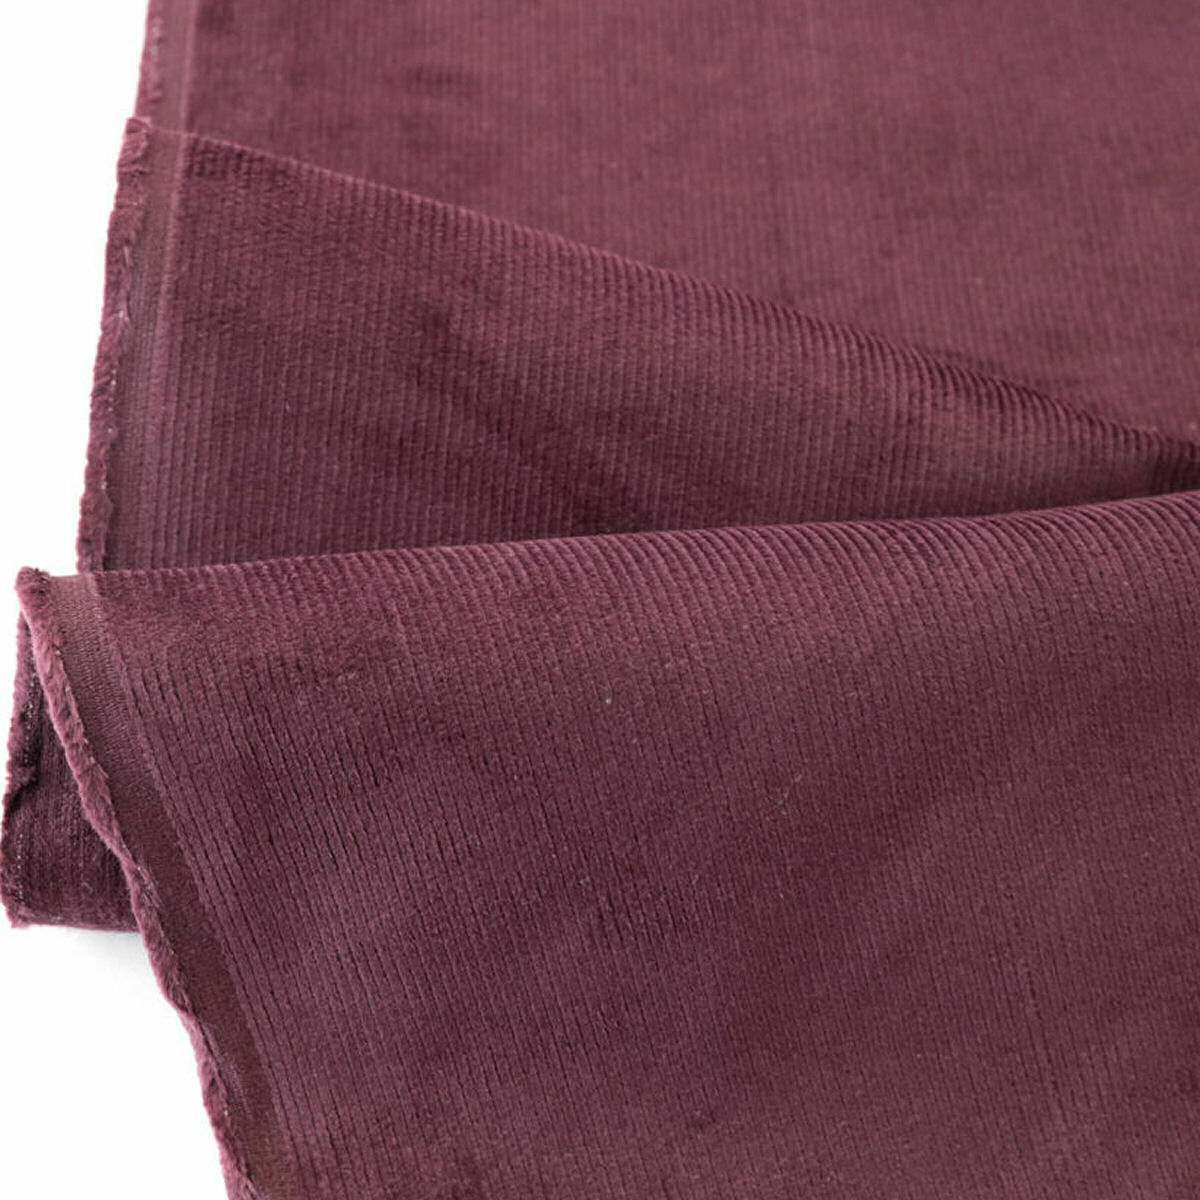 Stretch Cord Baumwollstoff Bekleidung Hose Jacke Cordstoff Meterware - violett